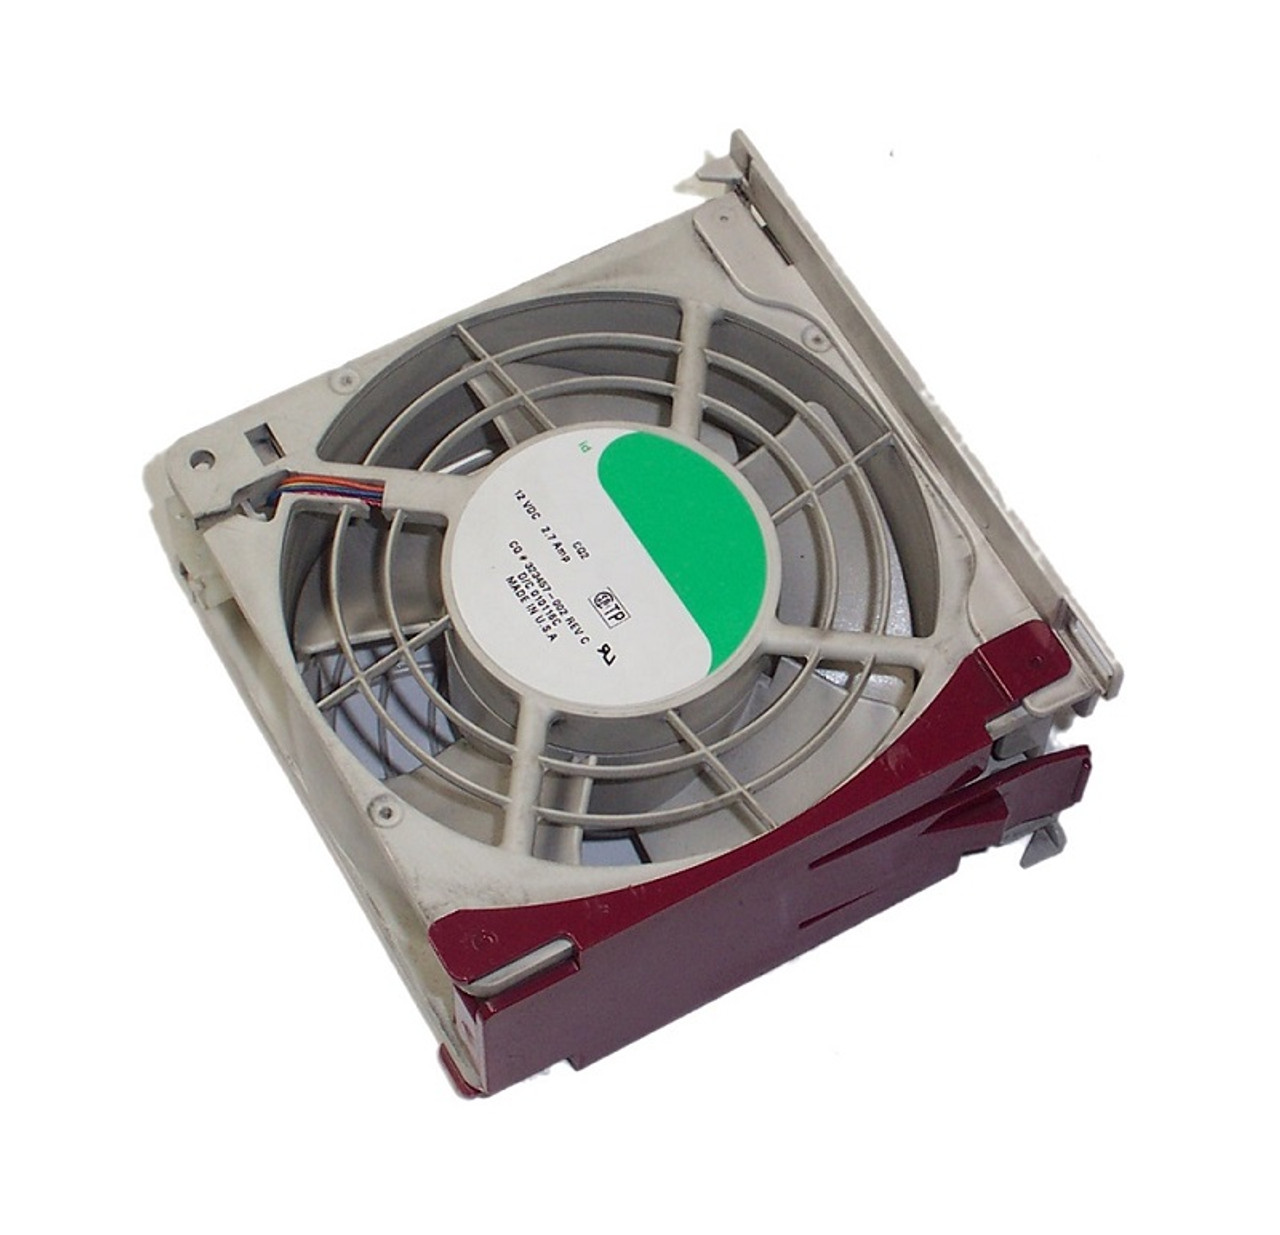 336091-001 - HP Hot Pluggable Fan Module for Storageworks Msa20